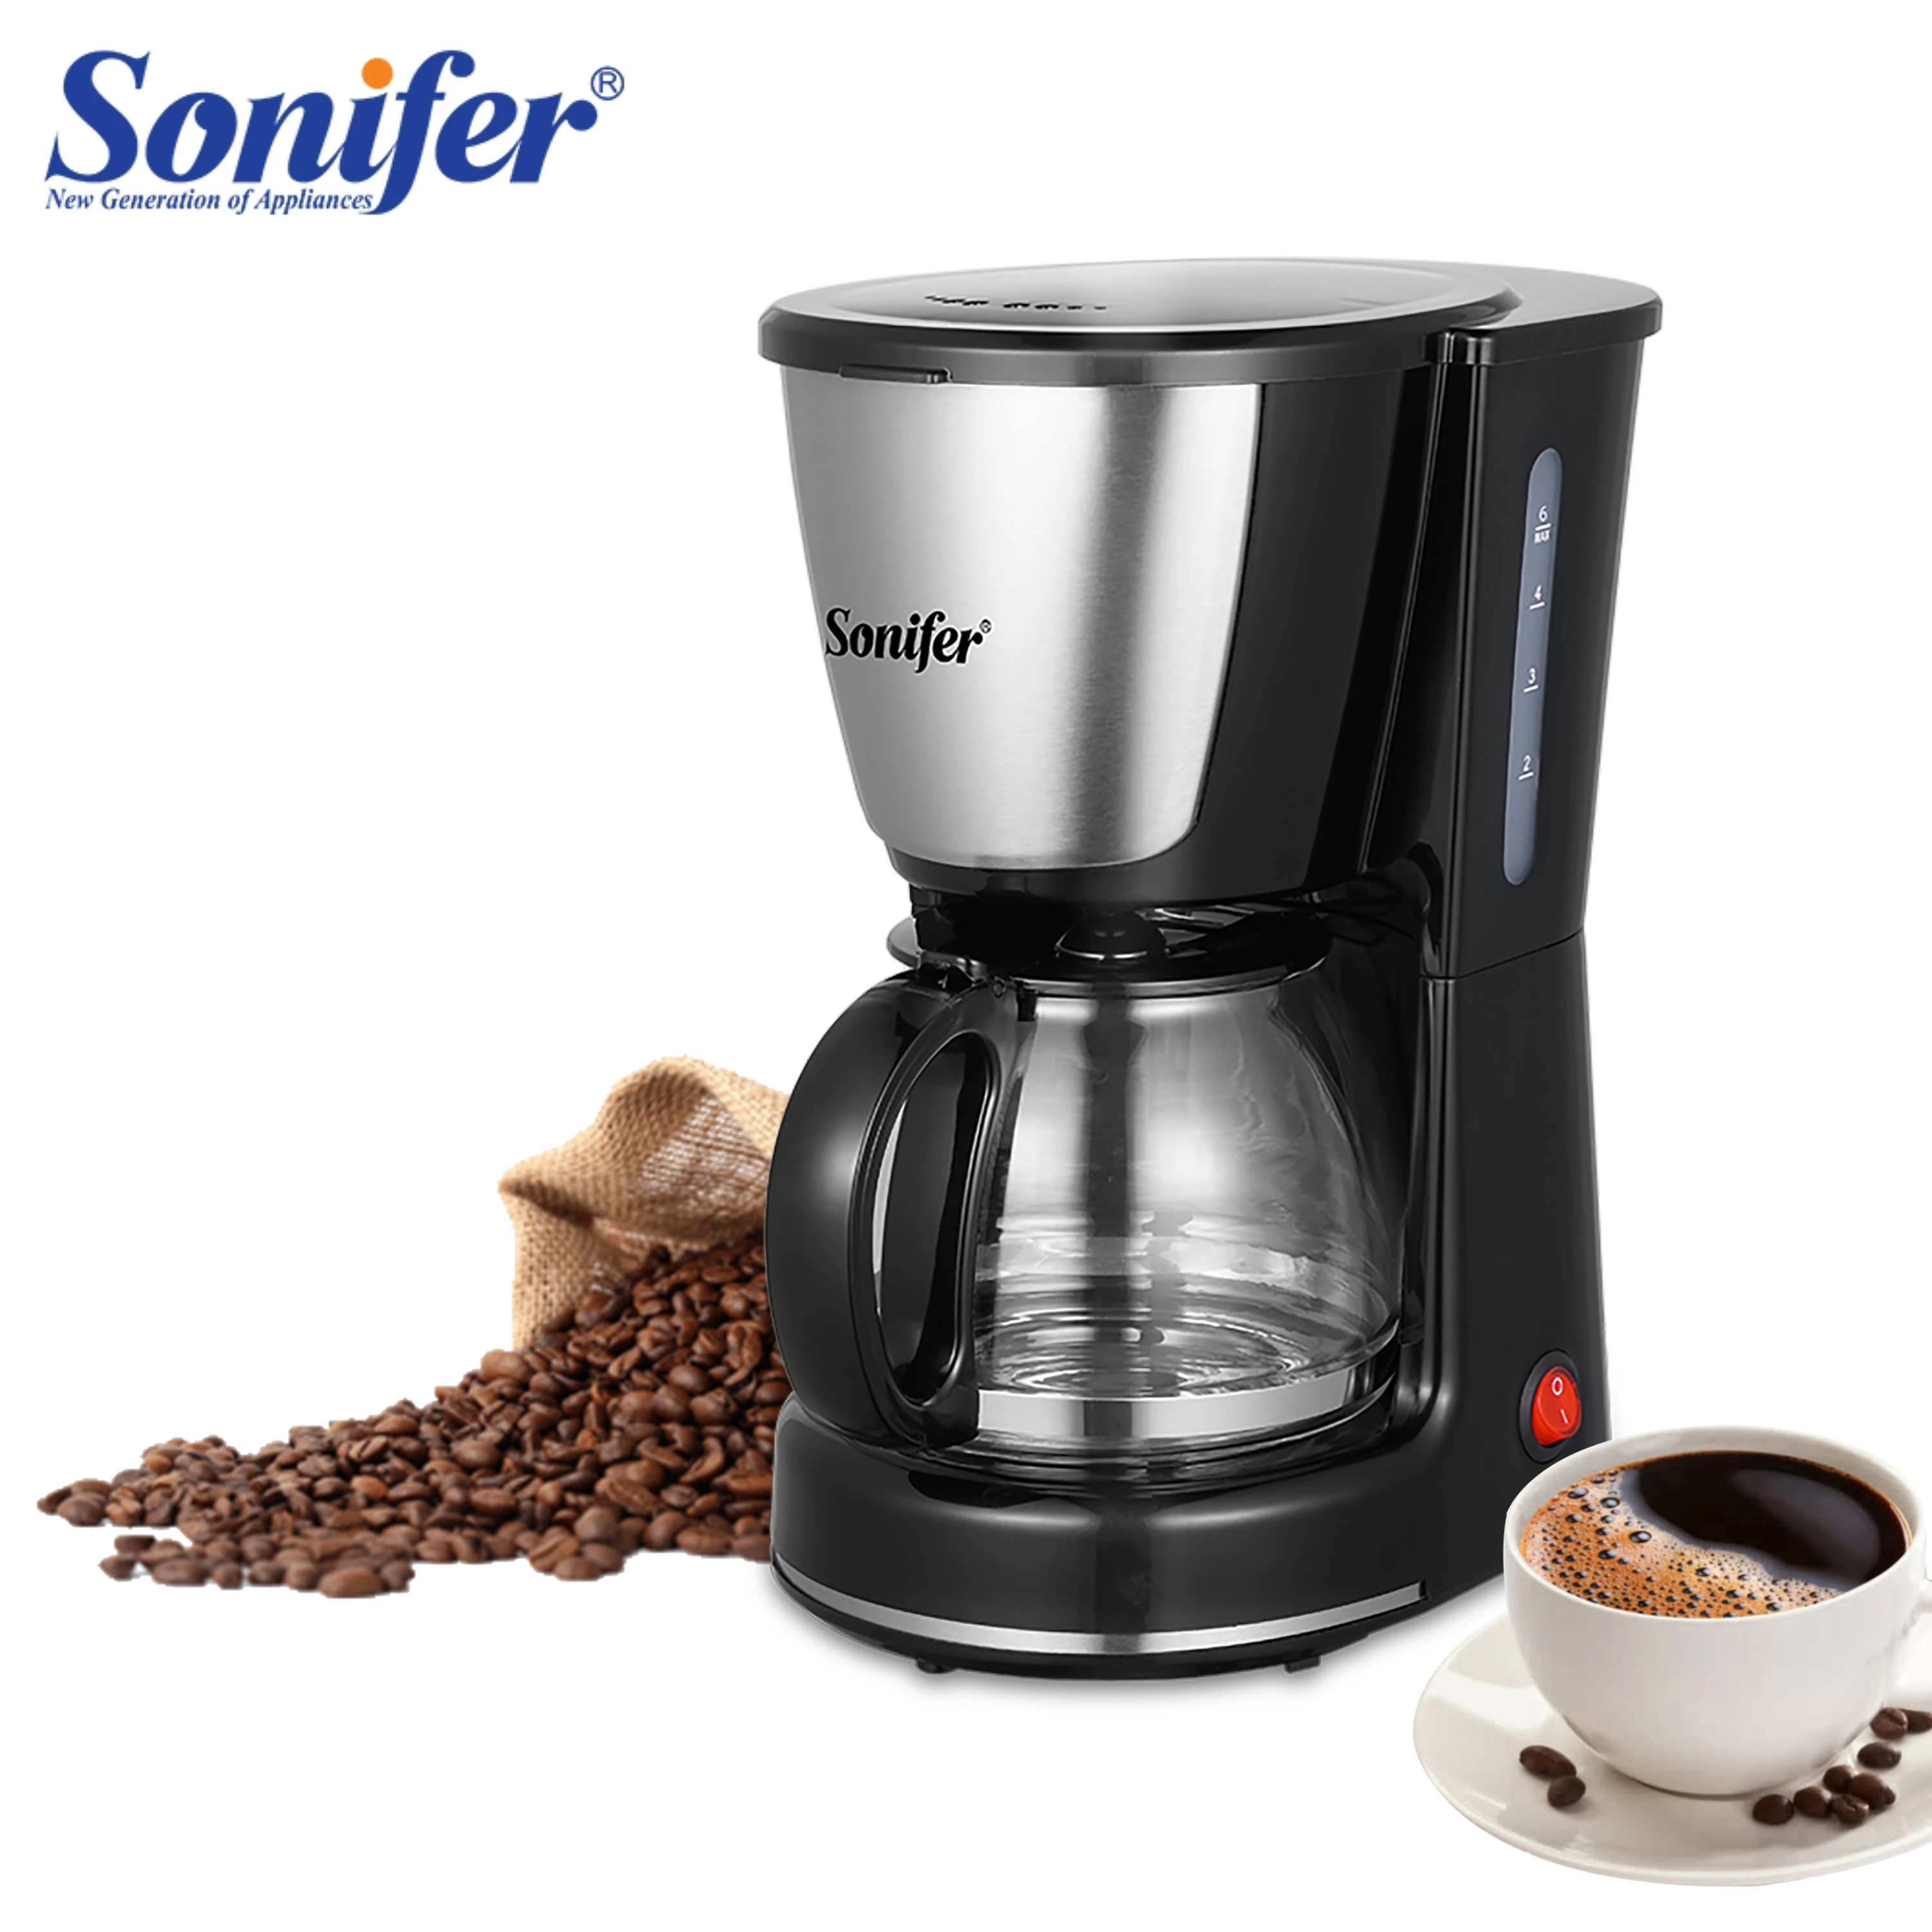 https://ae01.alicdn.com/kf/S43b8469b7acd44df974e27401a731255F/Sonifer-0-75L-Electric-Drip-Coffee-Maker-1000W-Household-Coffee-Machine-6-Cup-Tea-Coffee-Pot.jpg